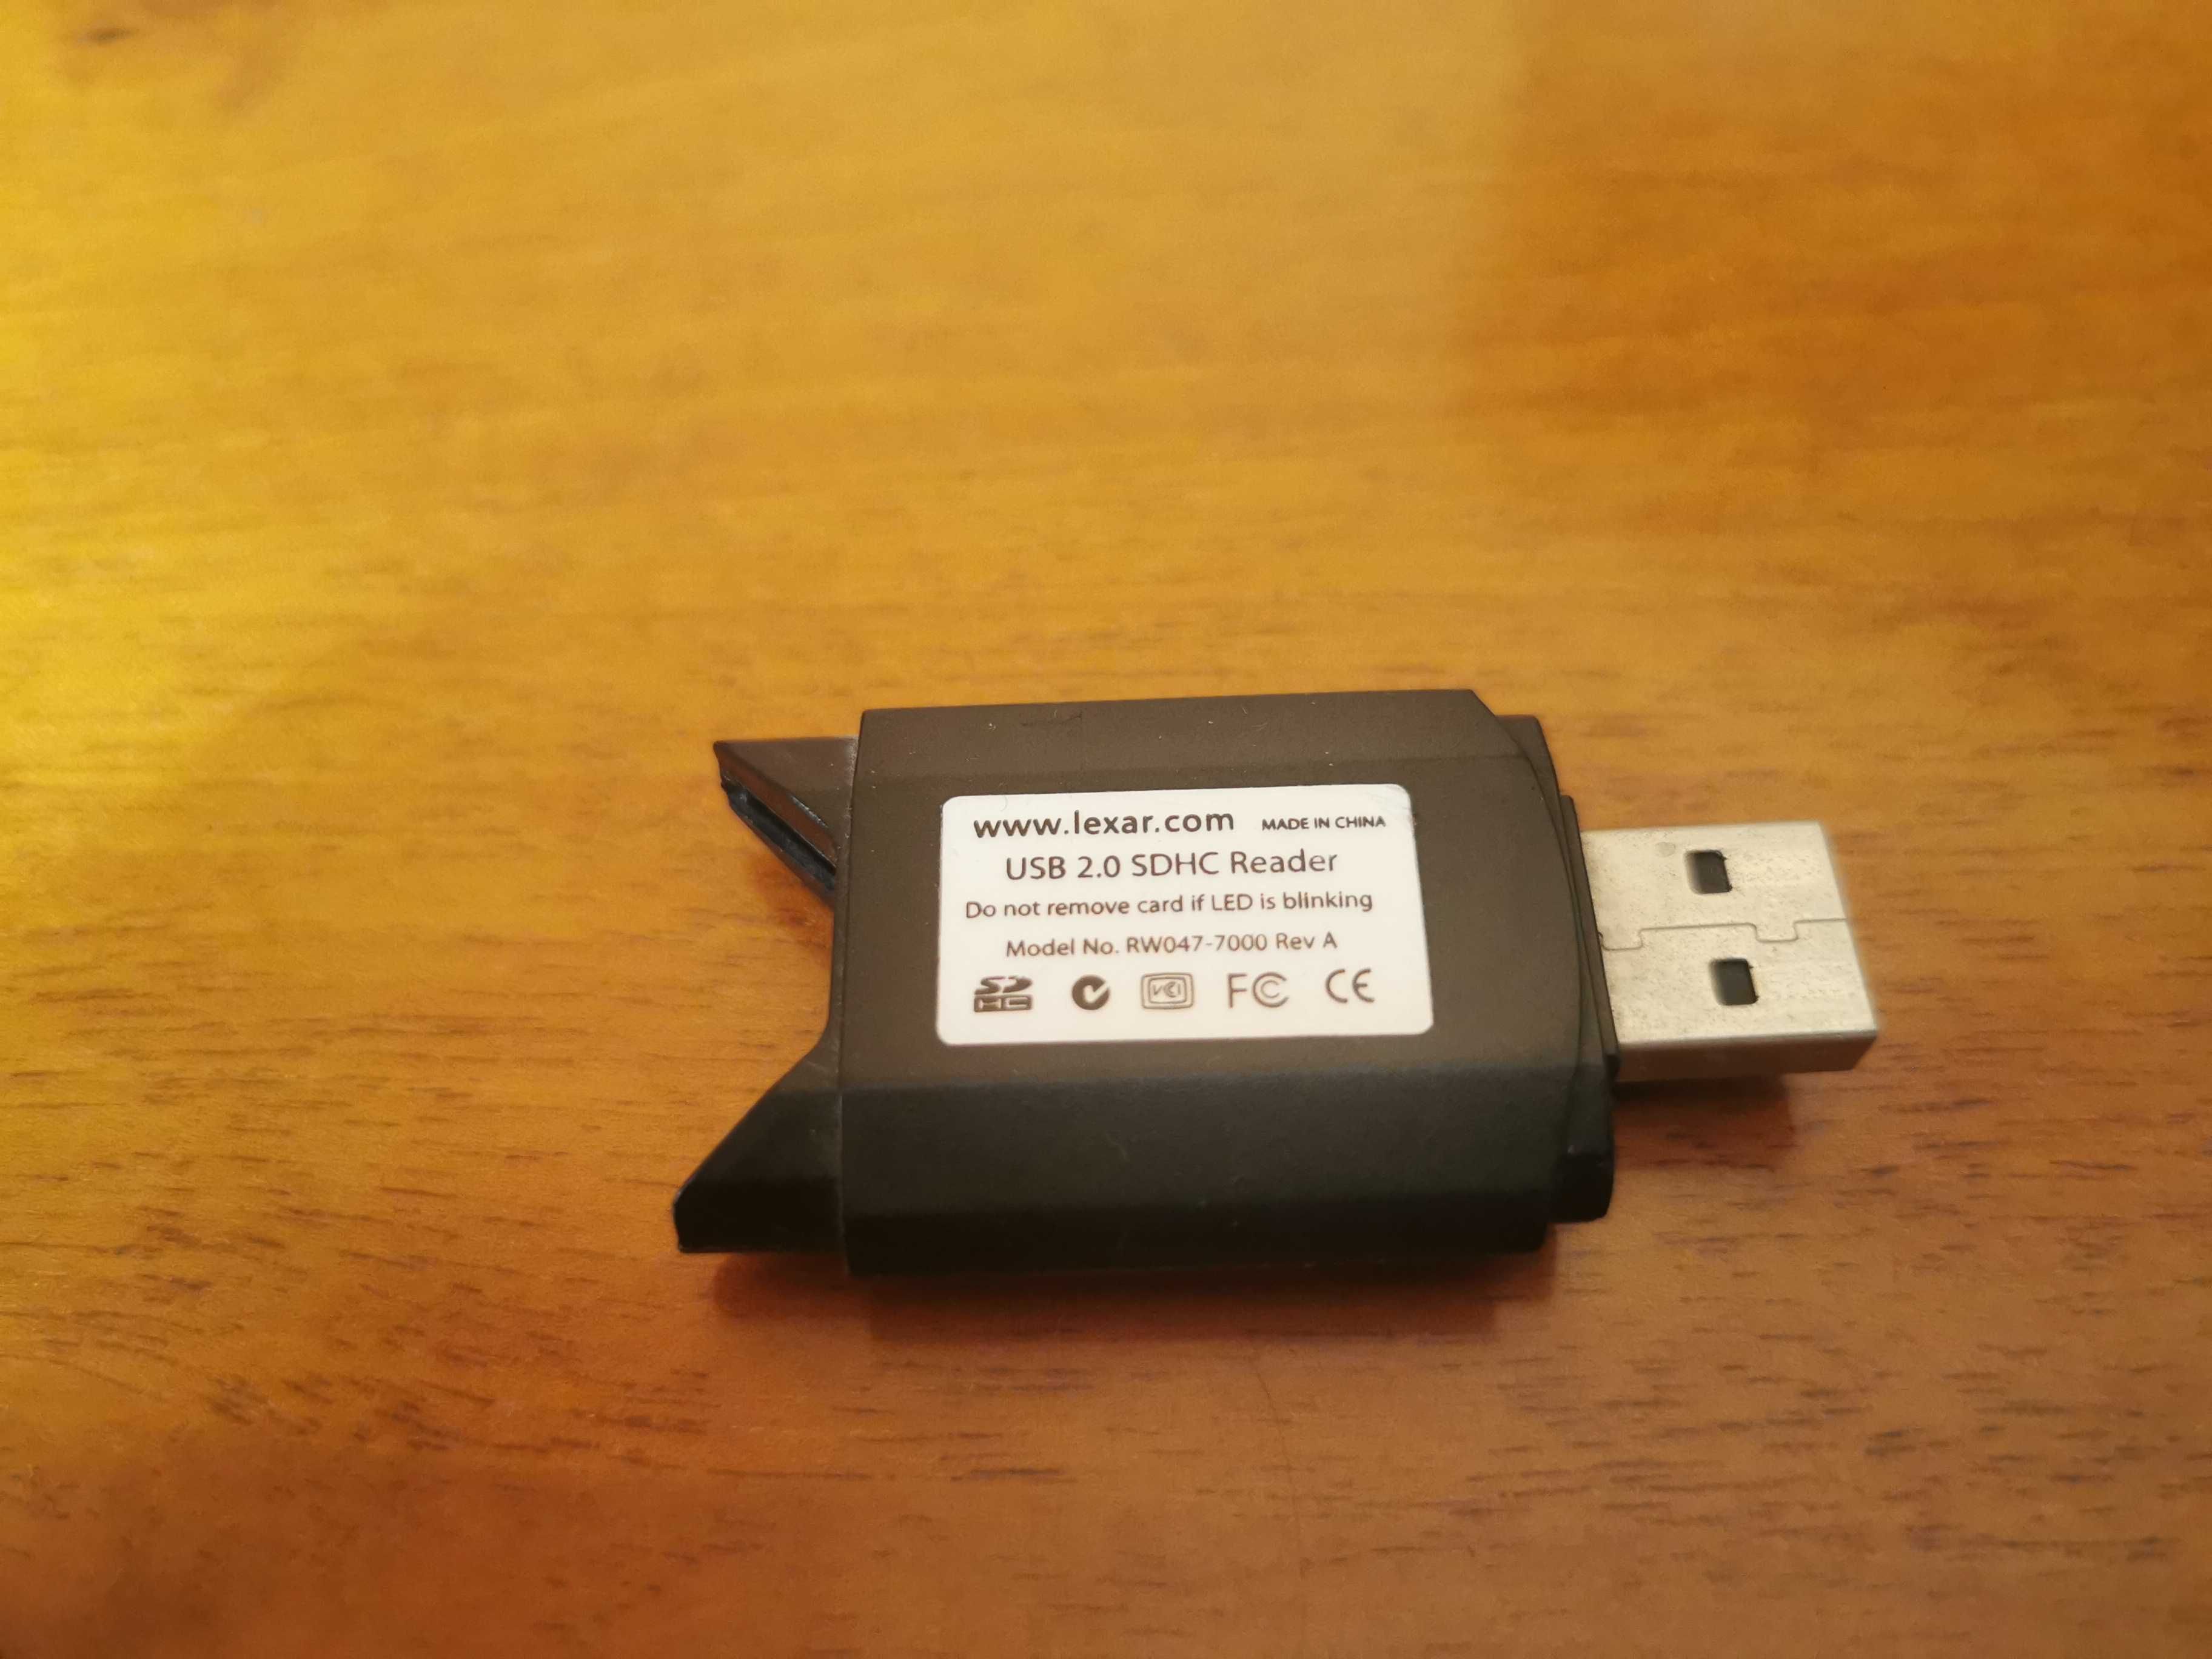 Card reader Lexar RW047 SDHC USB 2.0